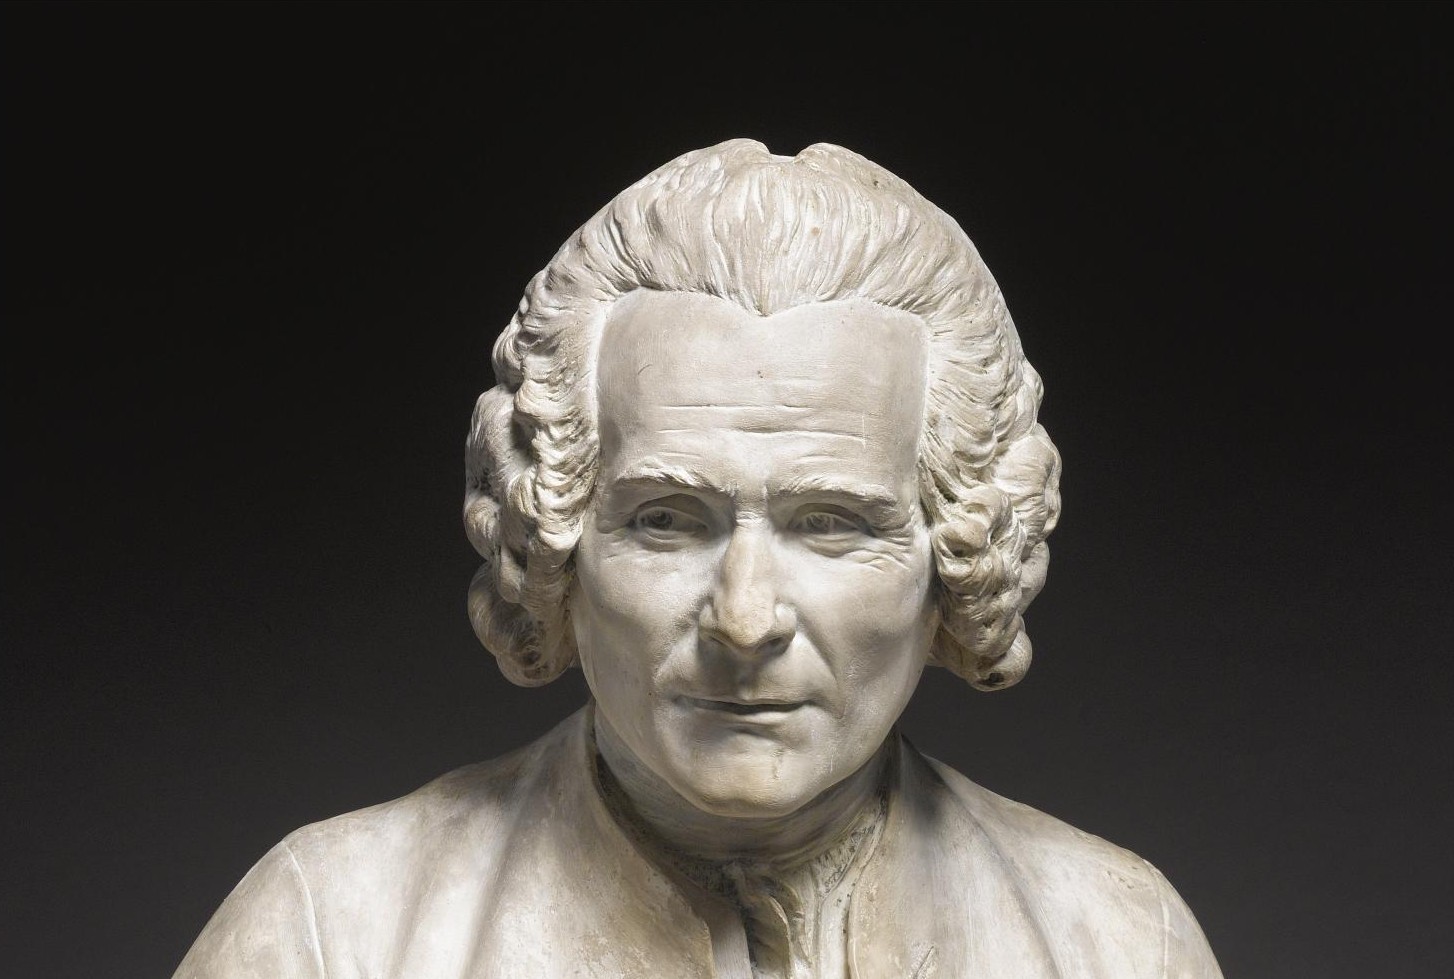 Rousseau & the origins of liberalism